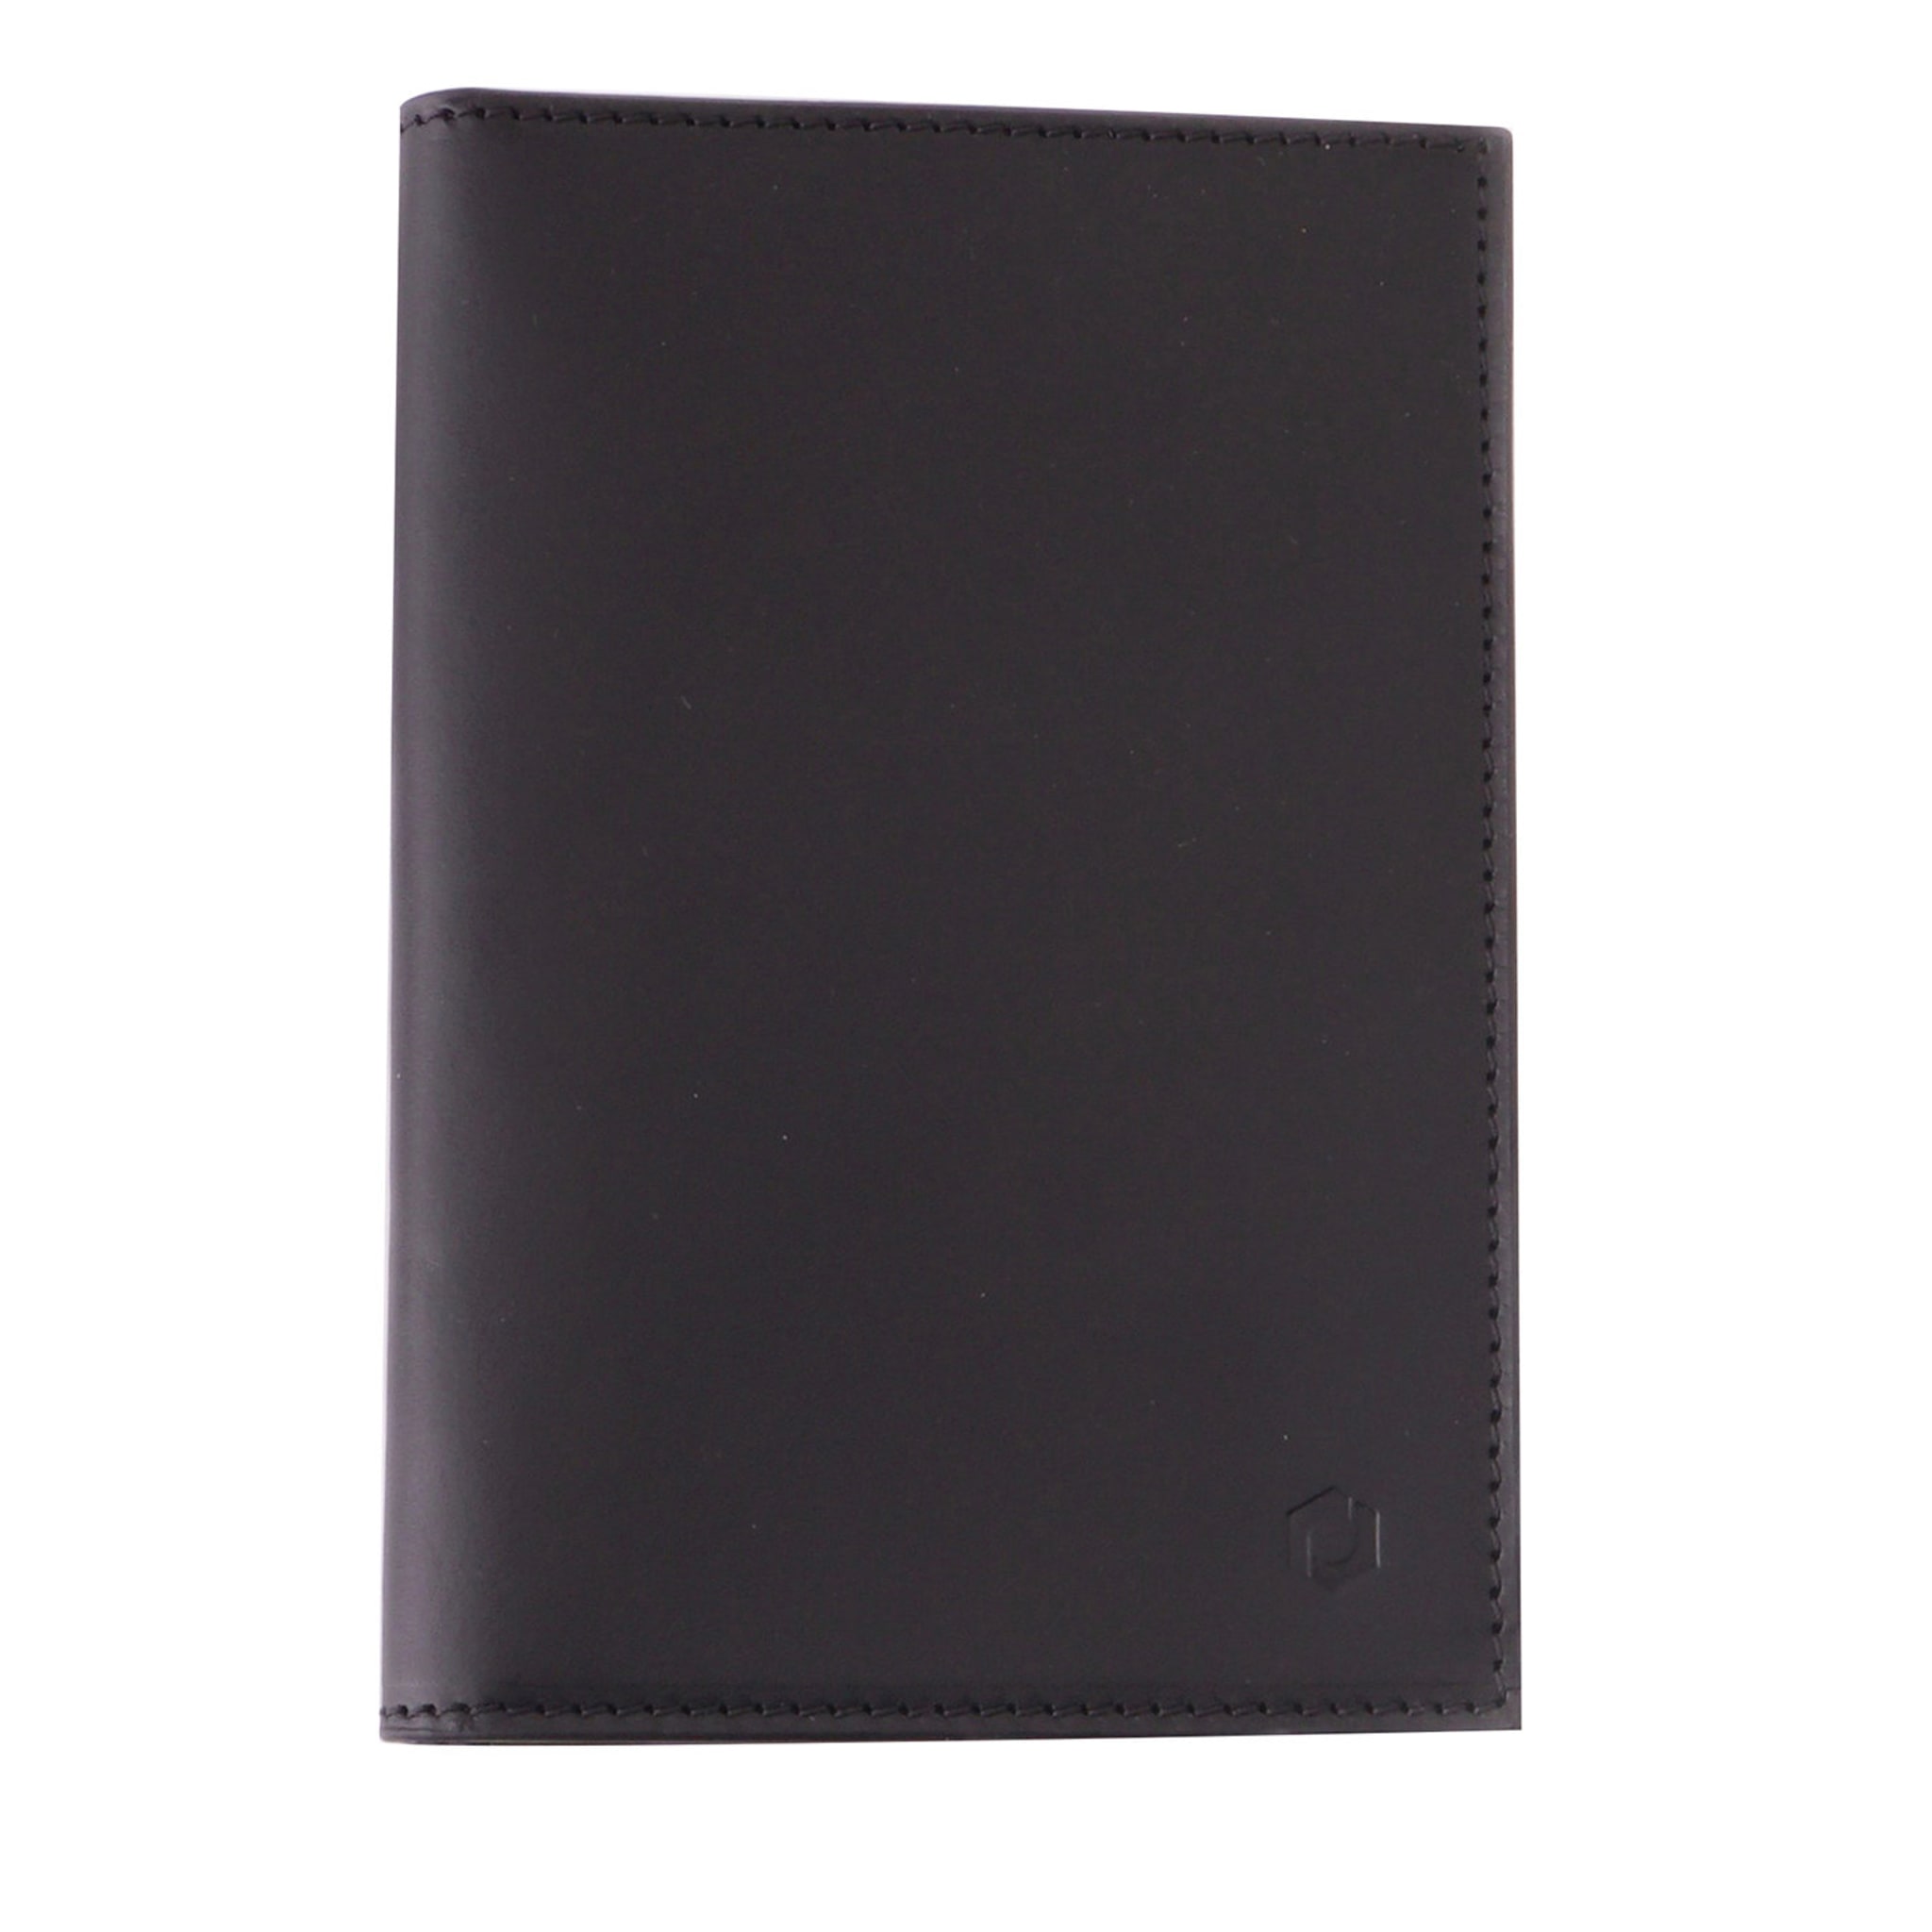 Porte-passeport en cuir noir - Vue principale